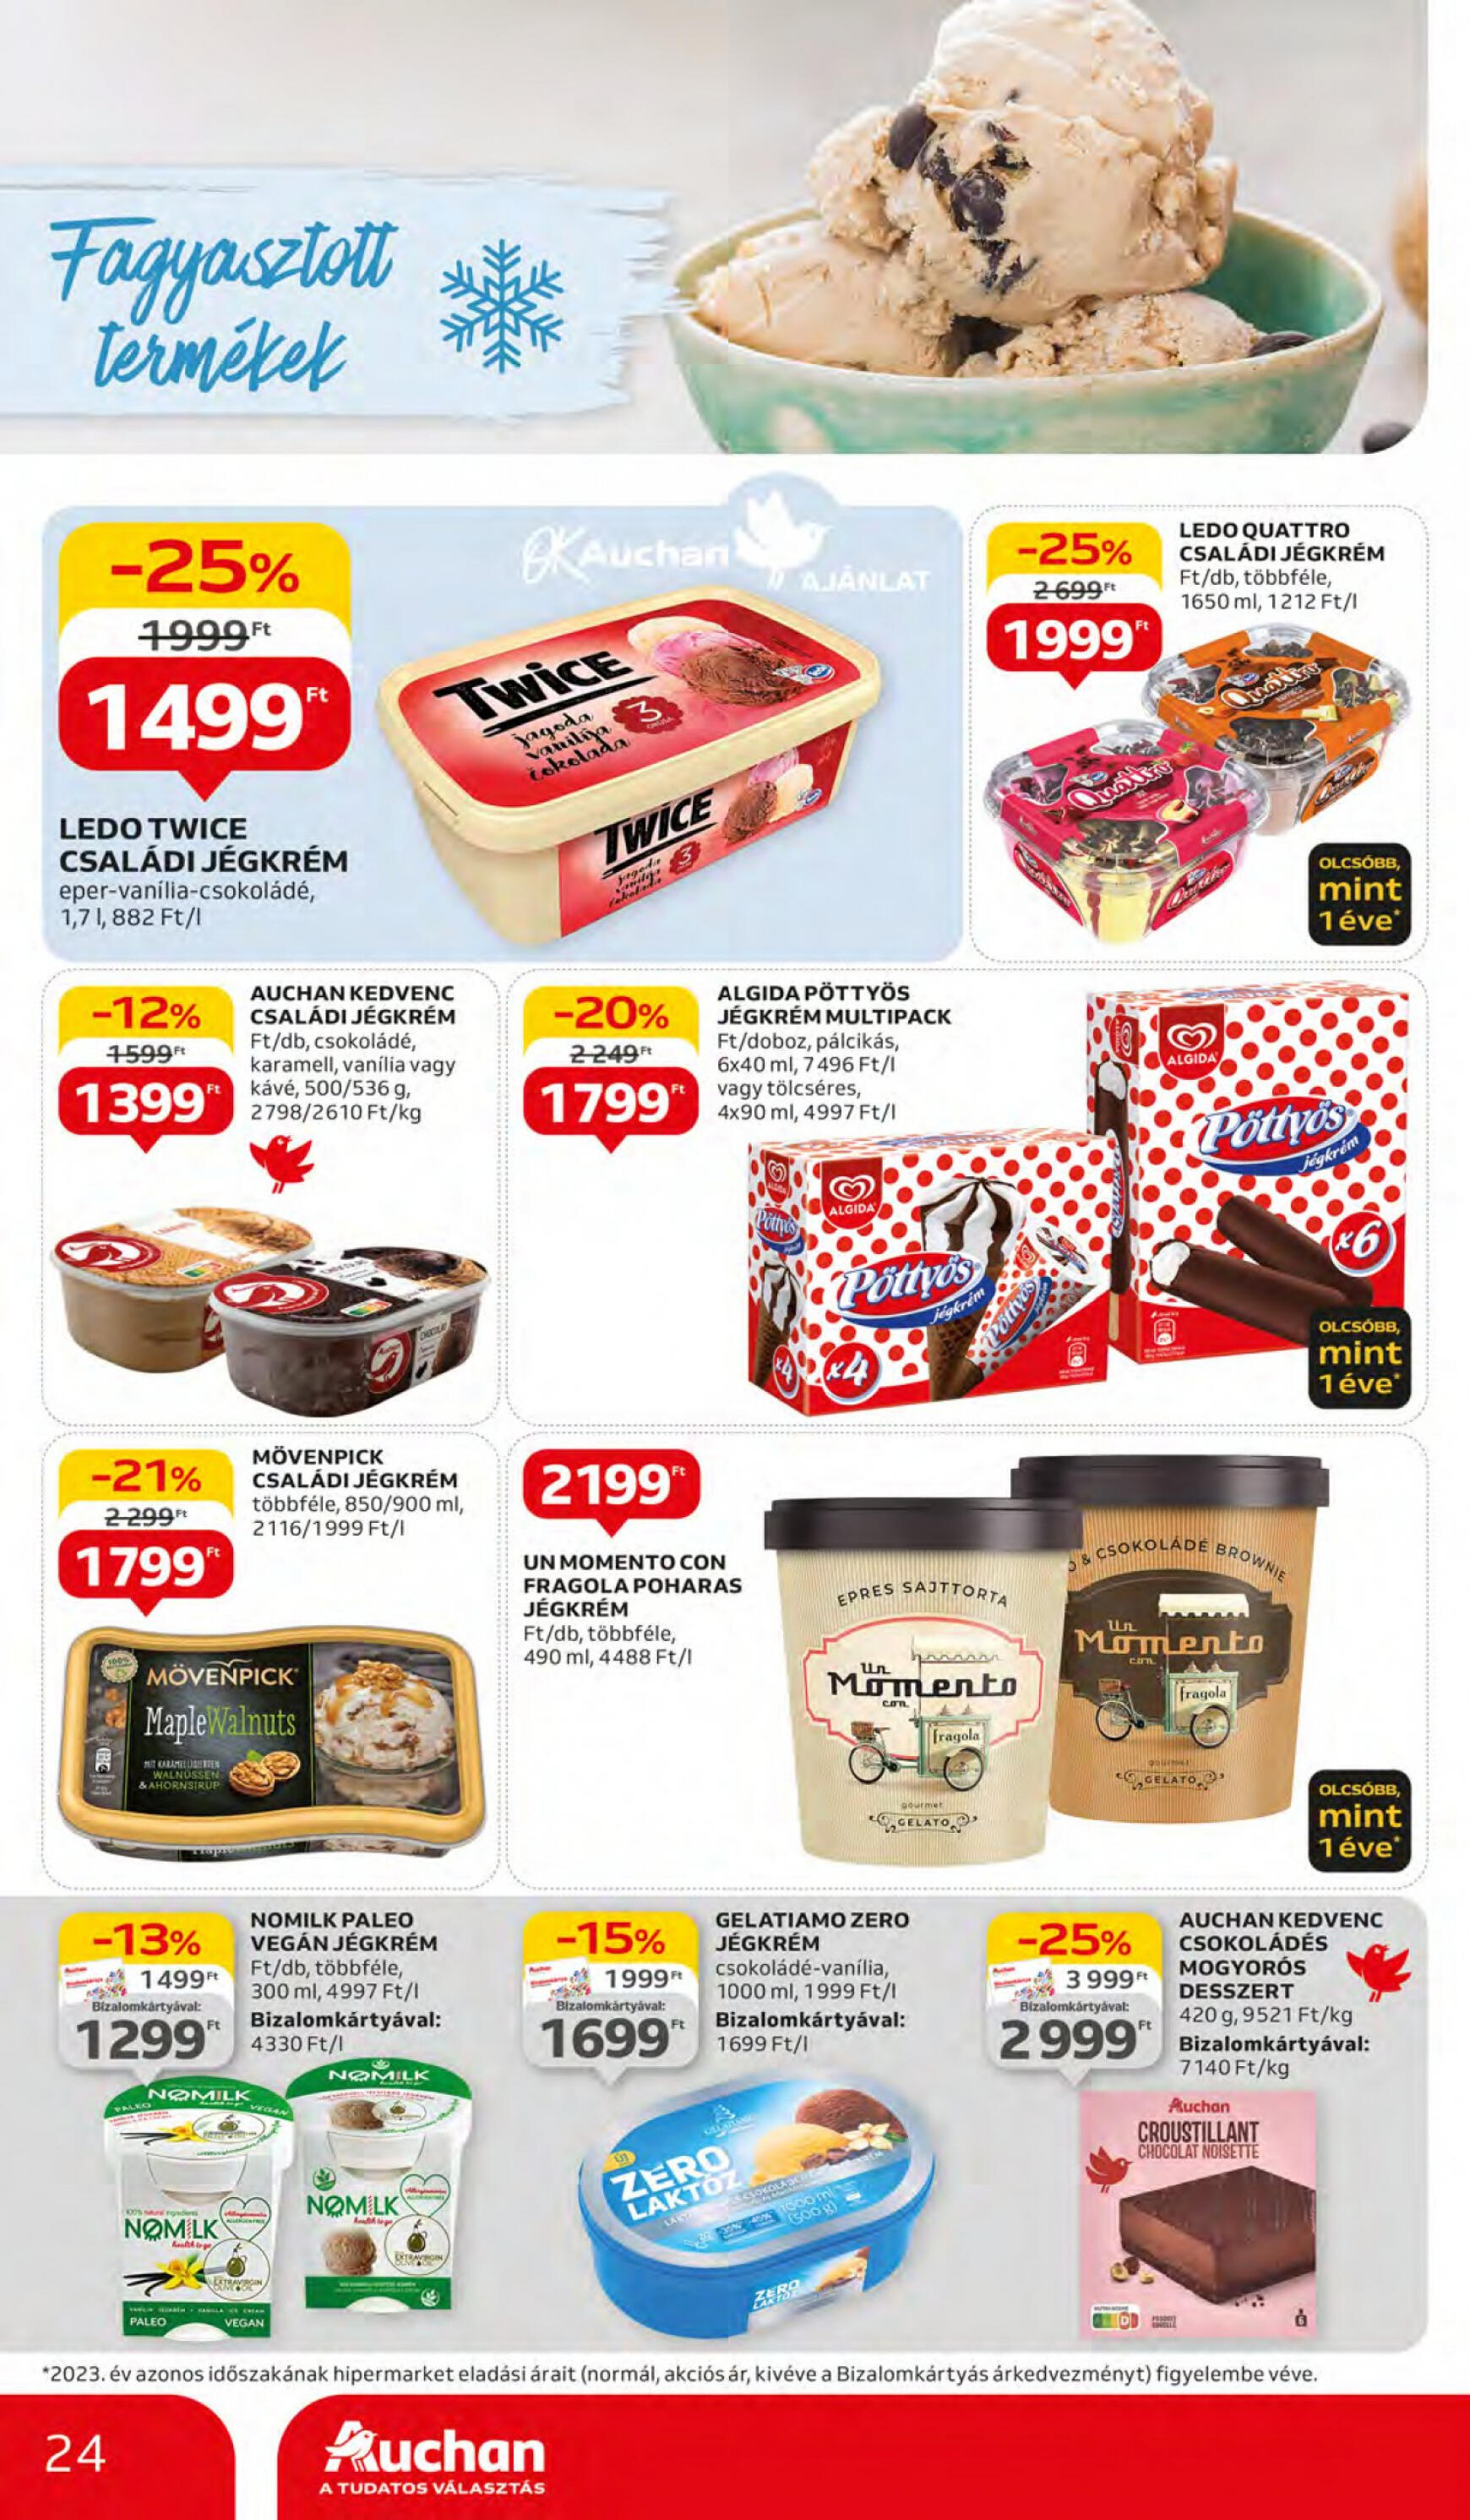 auchan - Aktuális újság Auchan 04.11. - 04.17. - page: 24